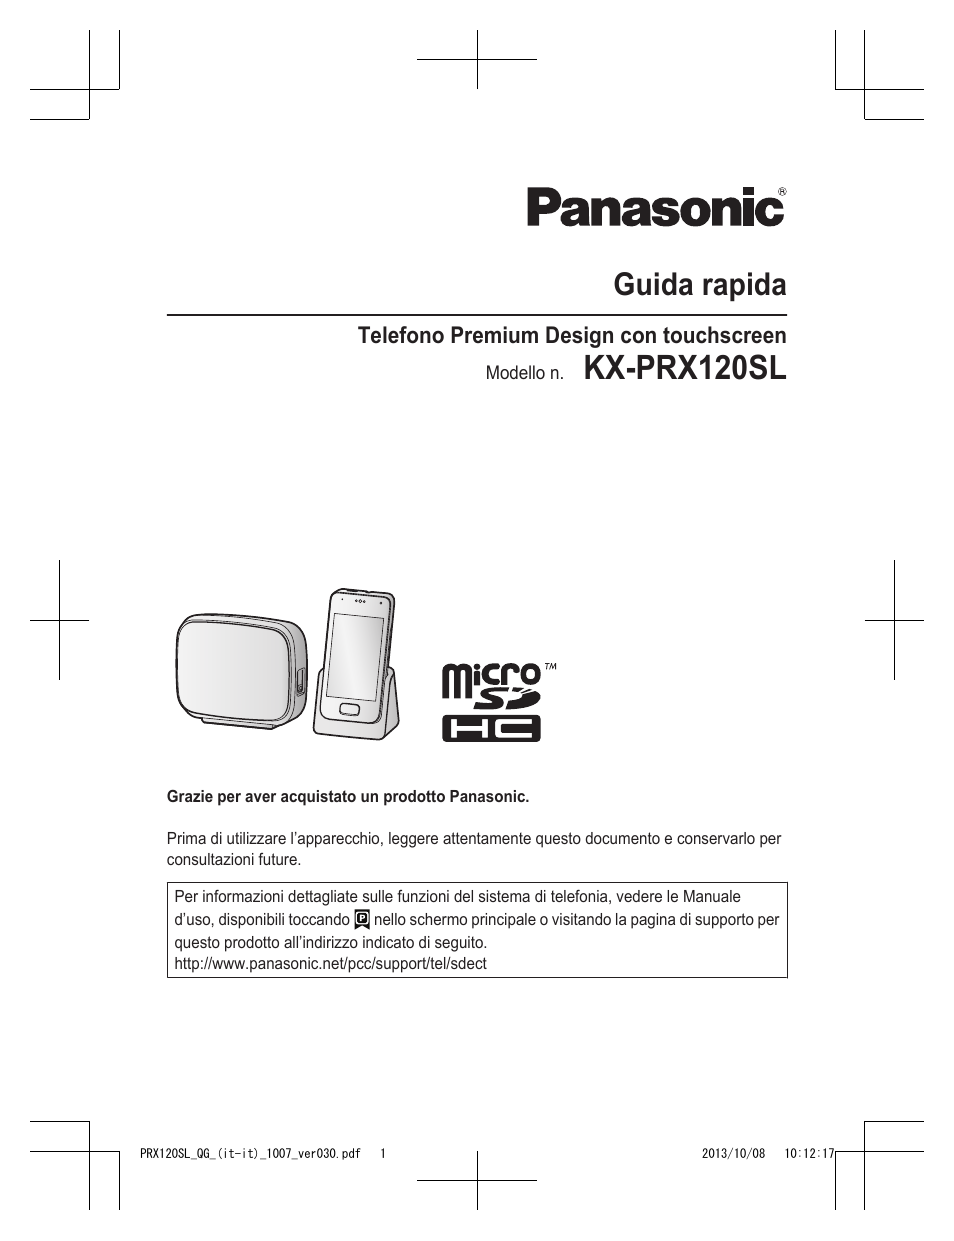 Panasonic KXPRX120SL Manuale d'uso | Pagine: 24